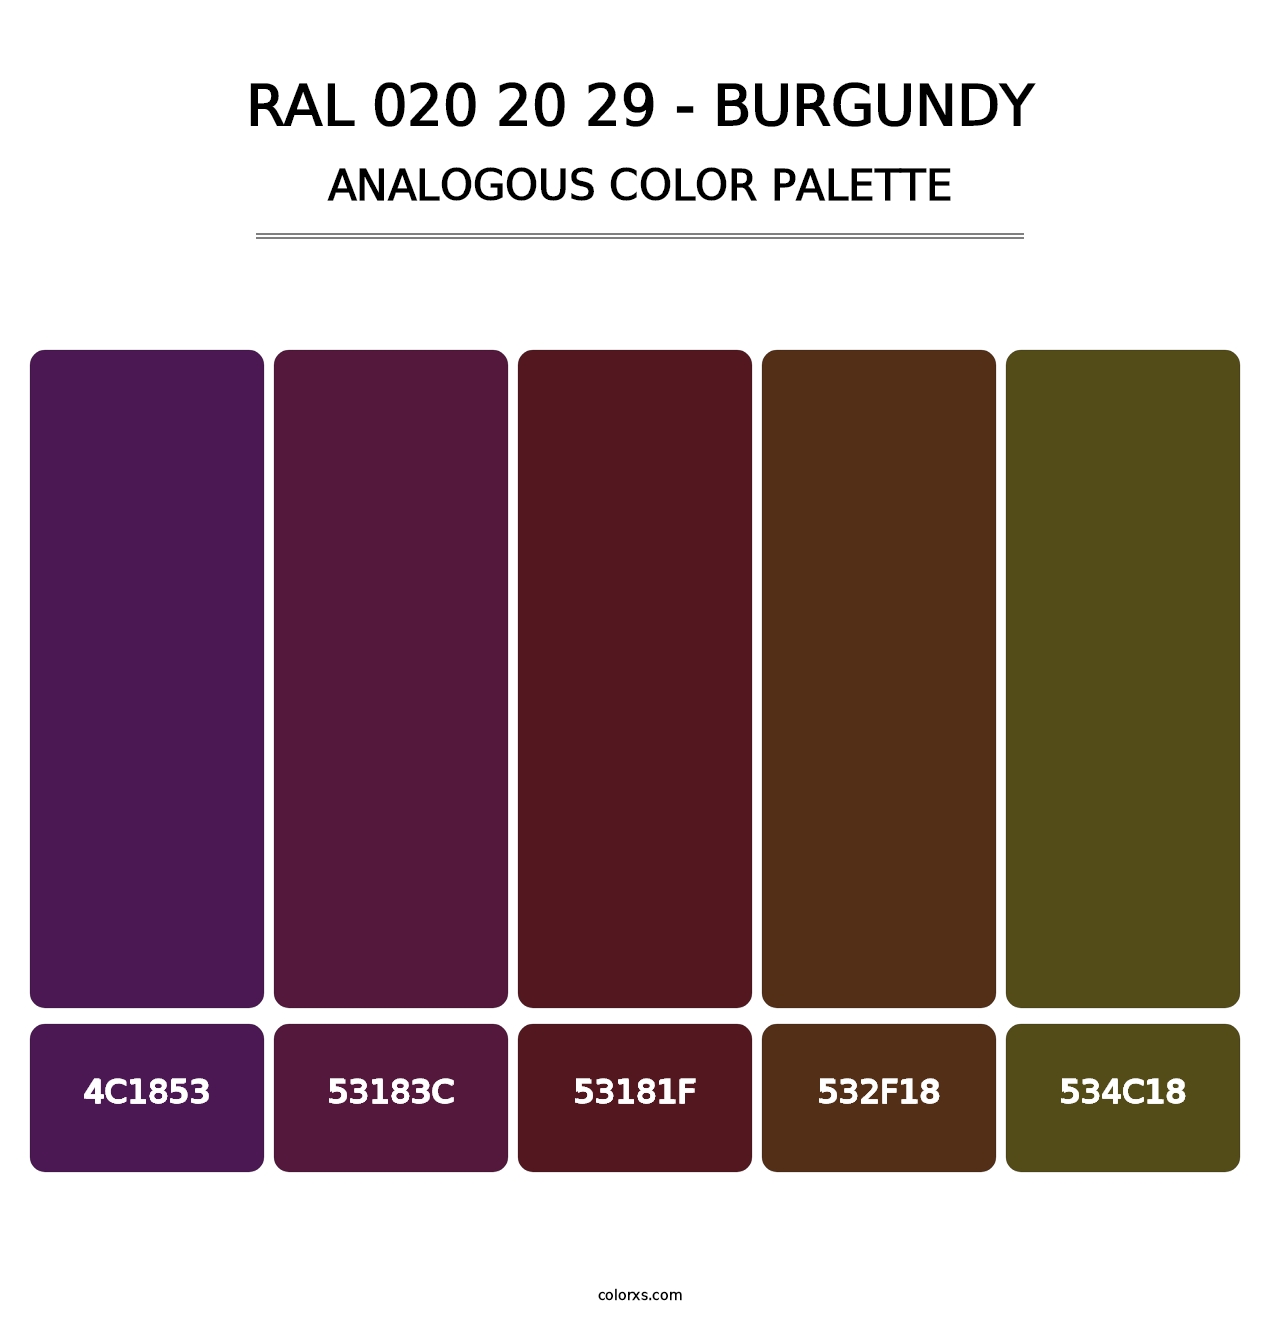 RAL 020 20 29 - Burgundy - Analogous Color Palette